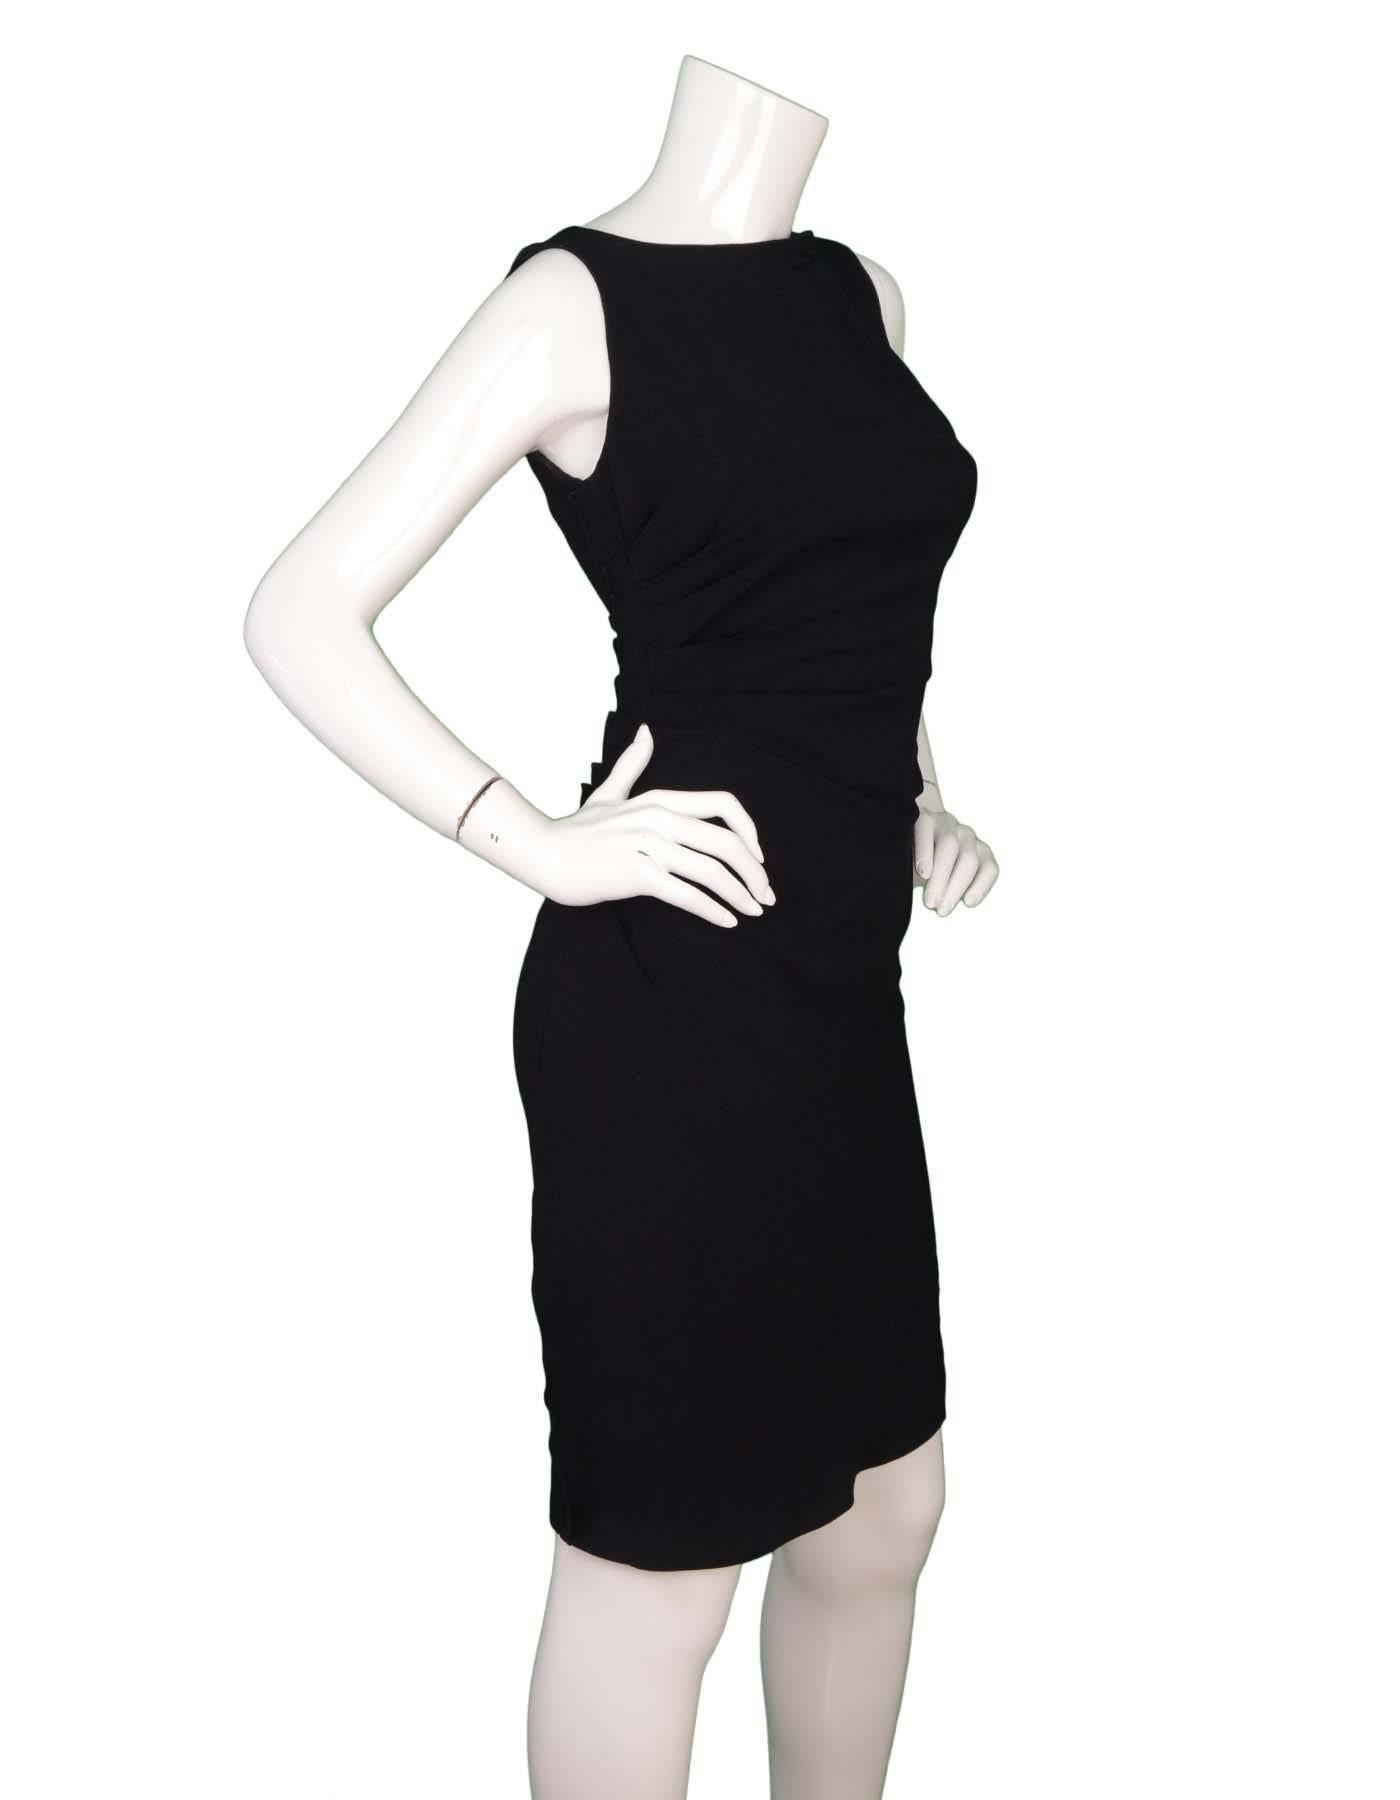 Women's Christian Dior Black Sleeveless Ruched Dress sz 6